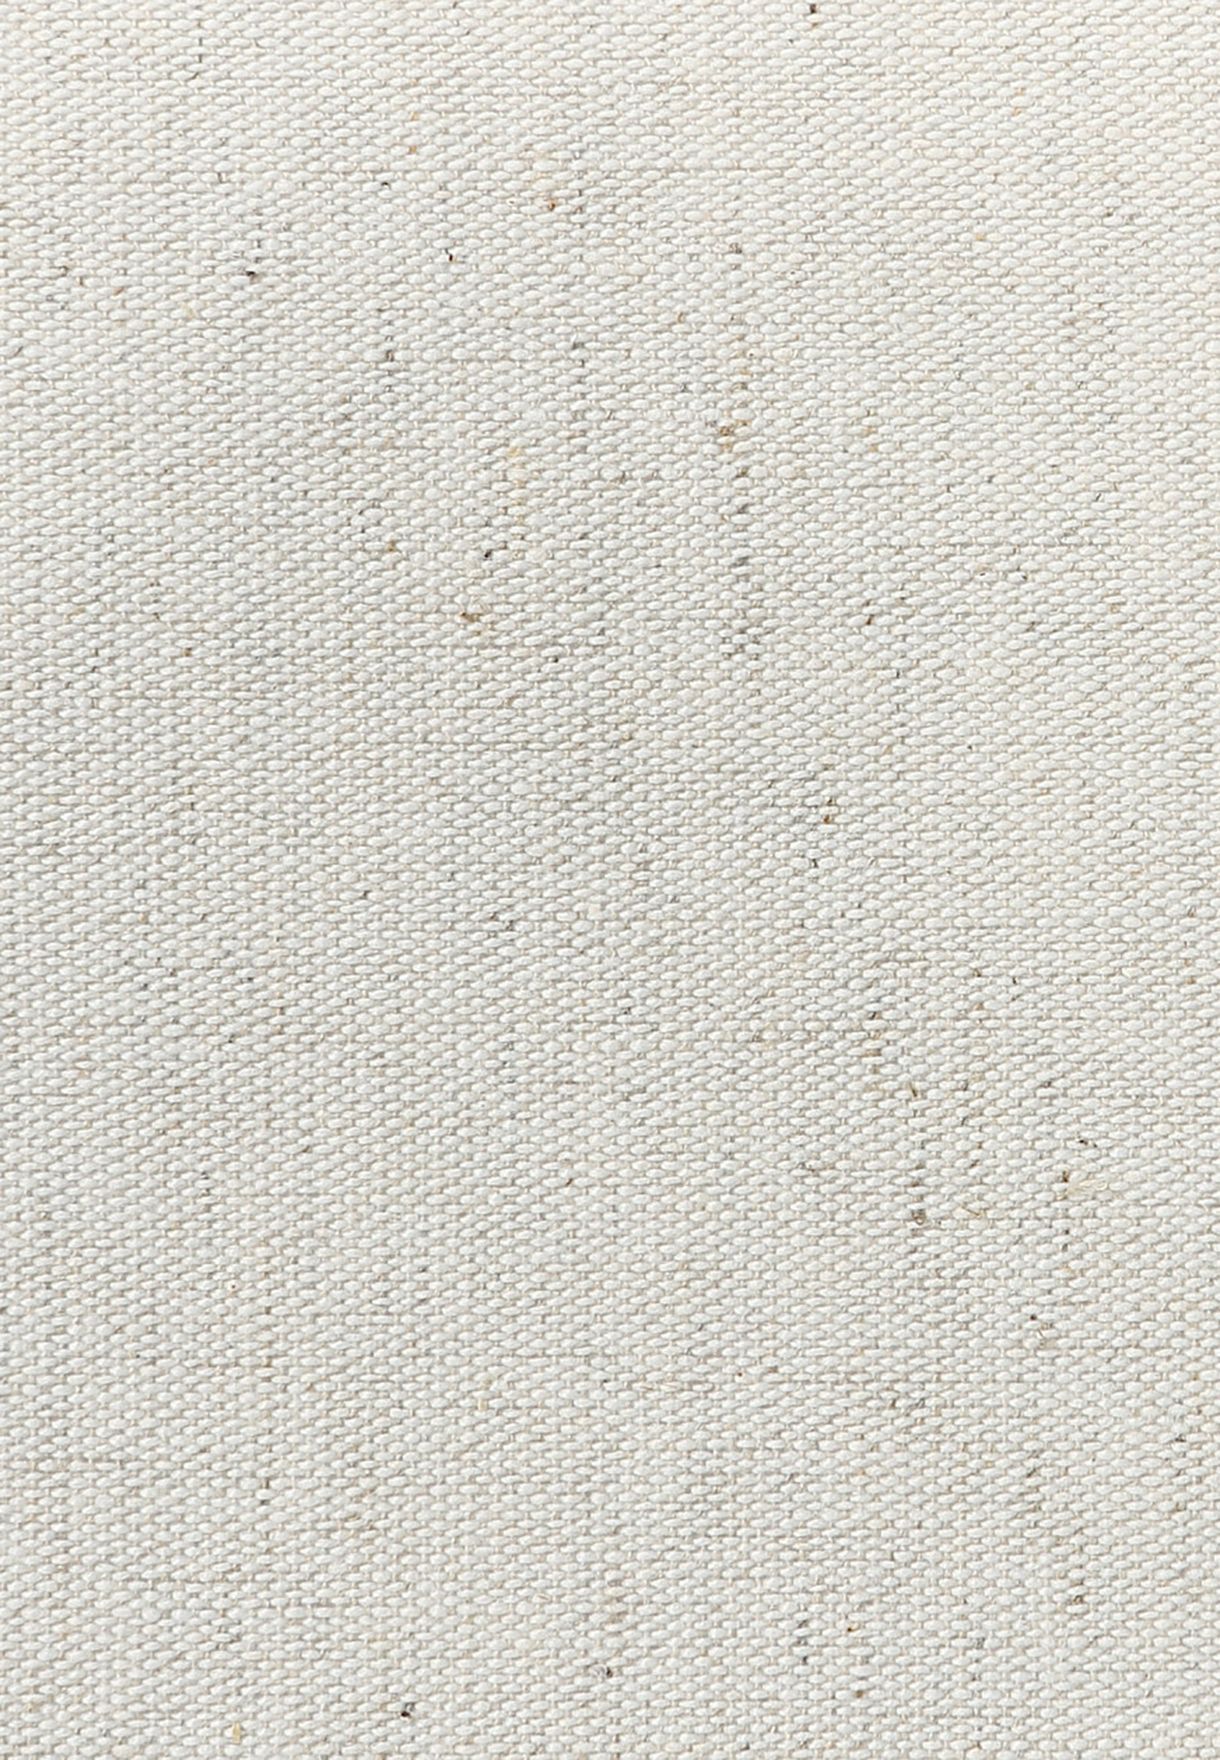 Cotton-Linen Polyester Soft Box Square